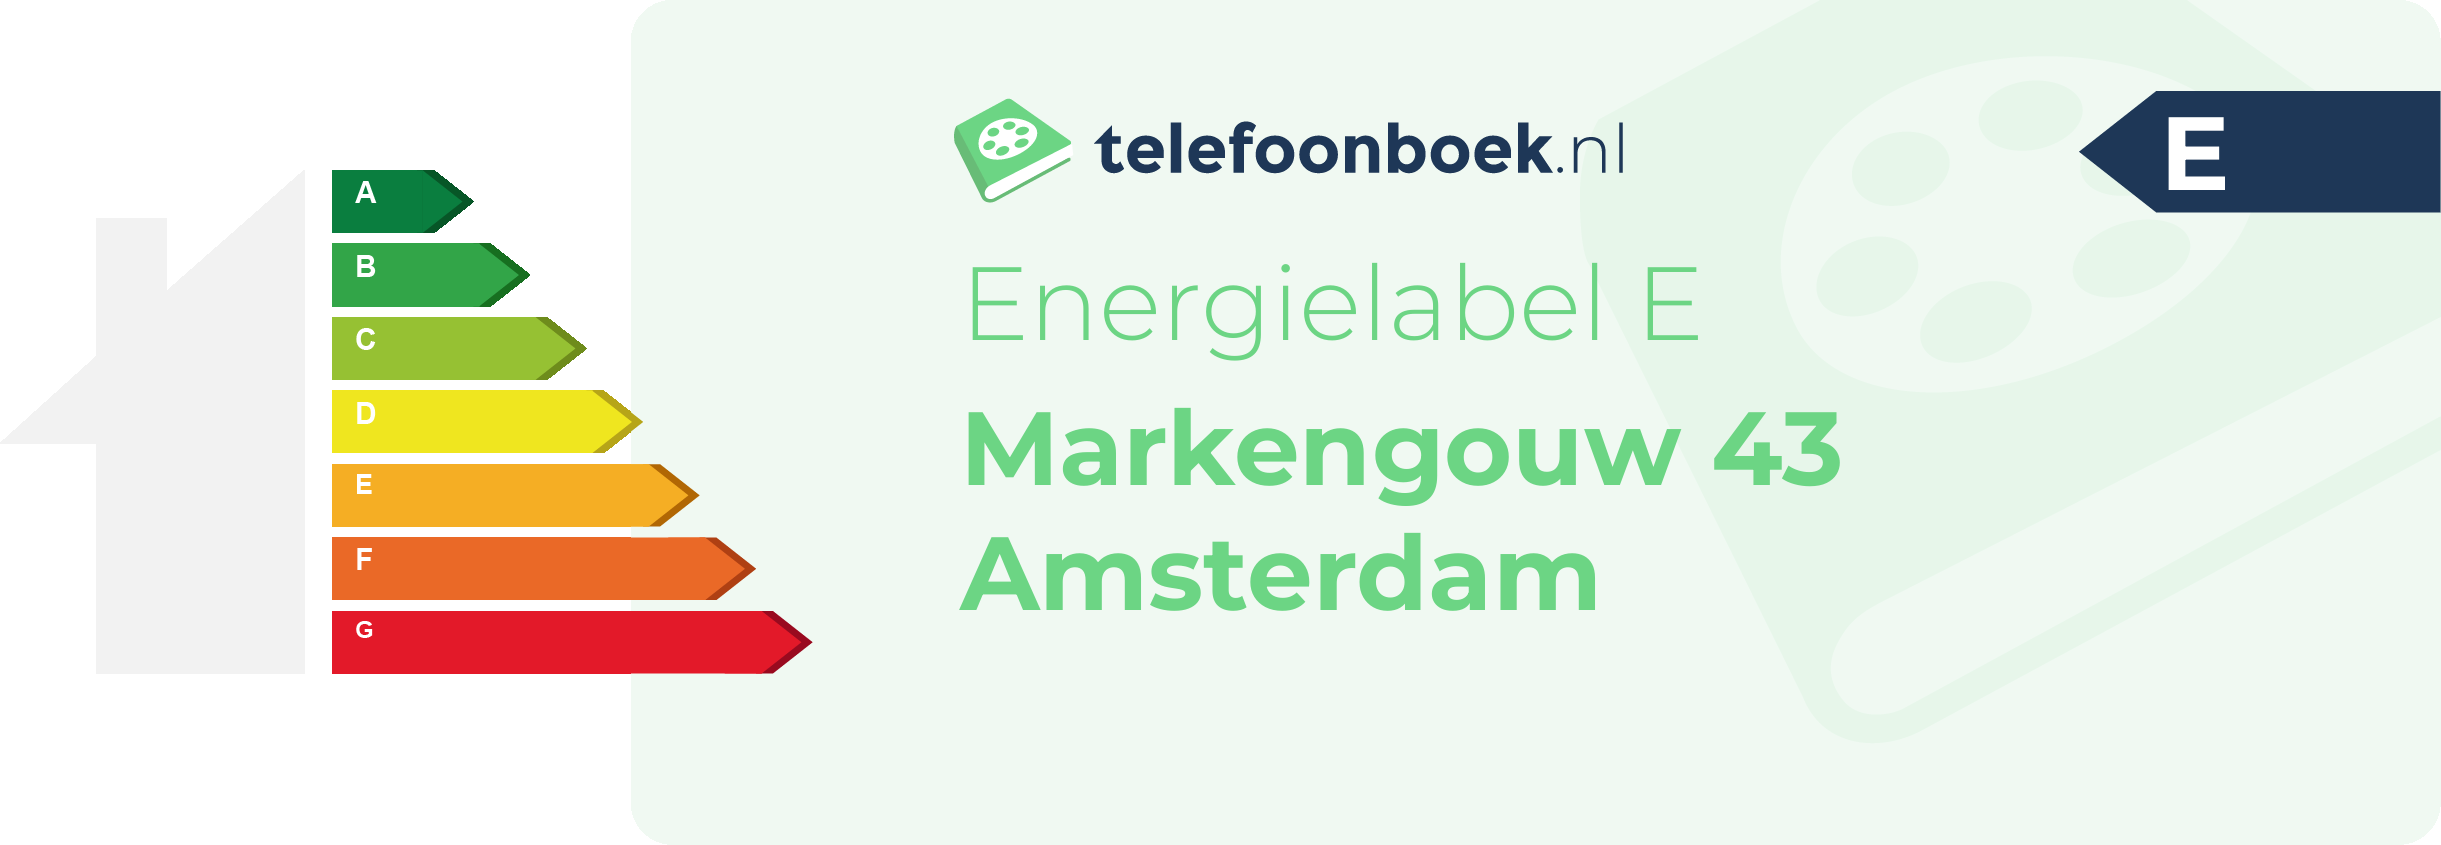 Energielabel Markengouw 43 Amsterdam